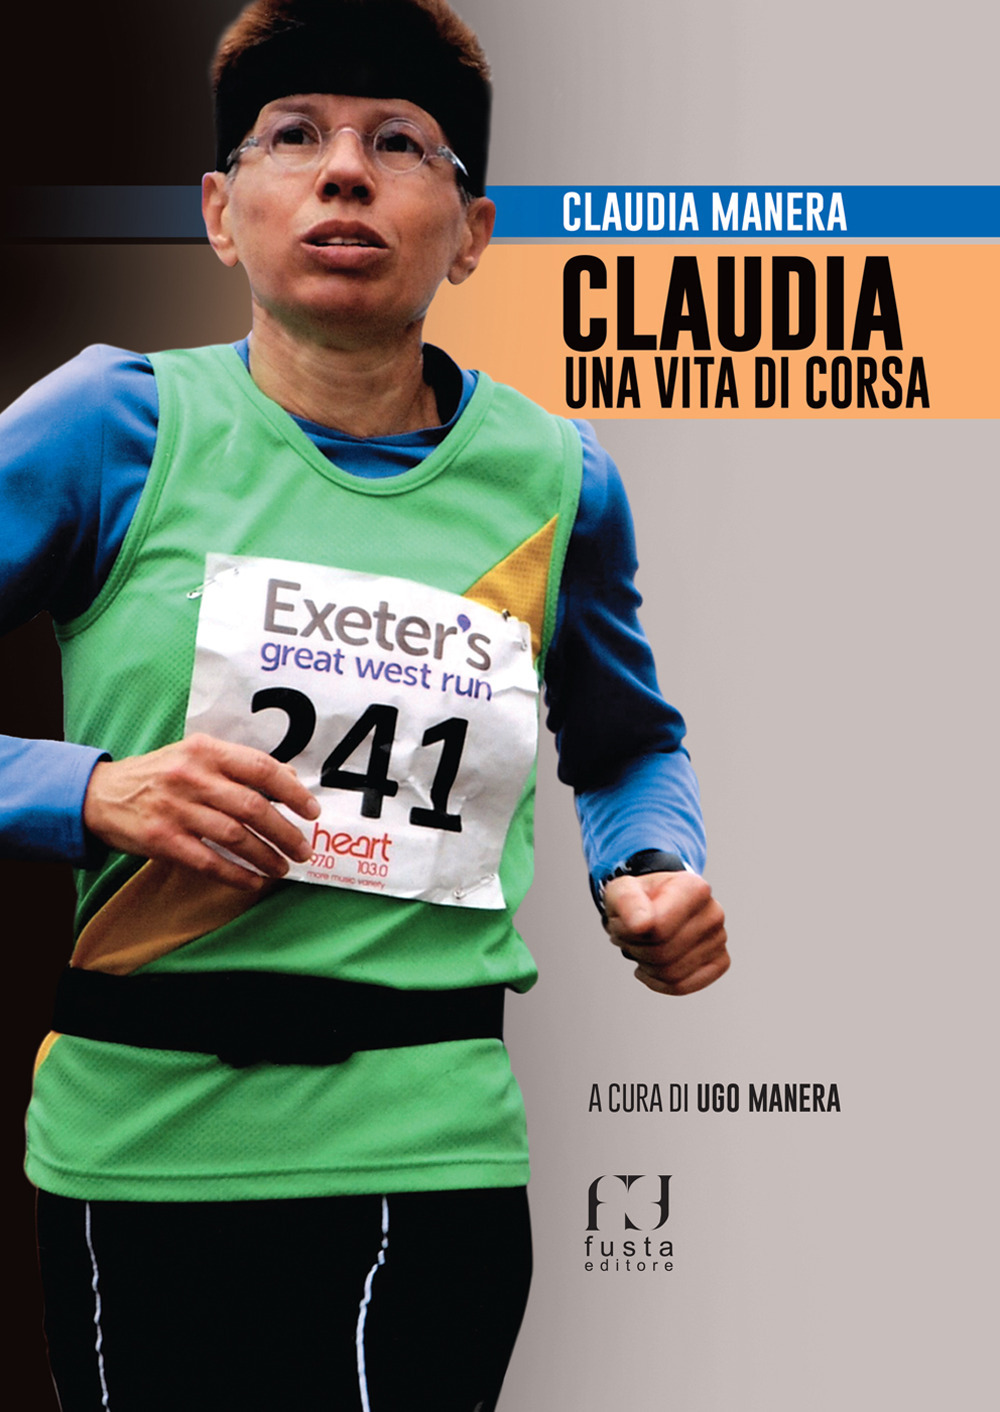 Claudia, una vita di corsa